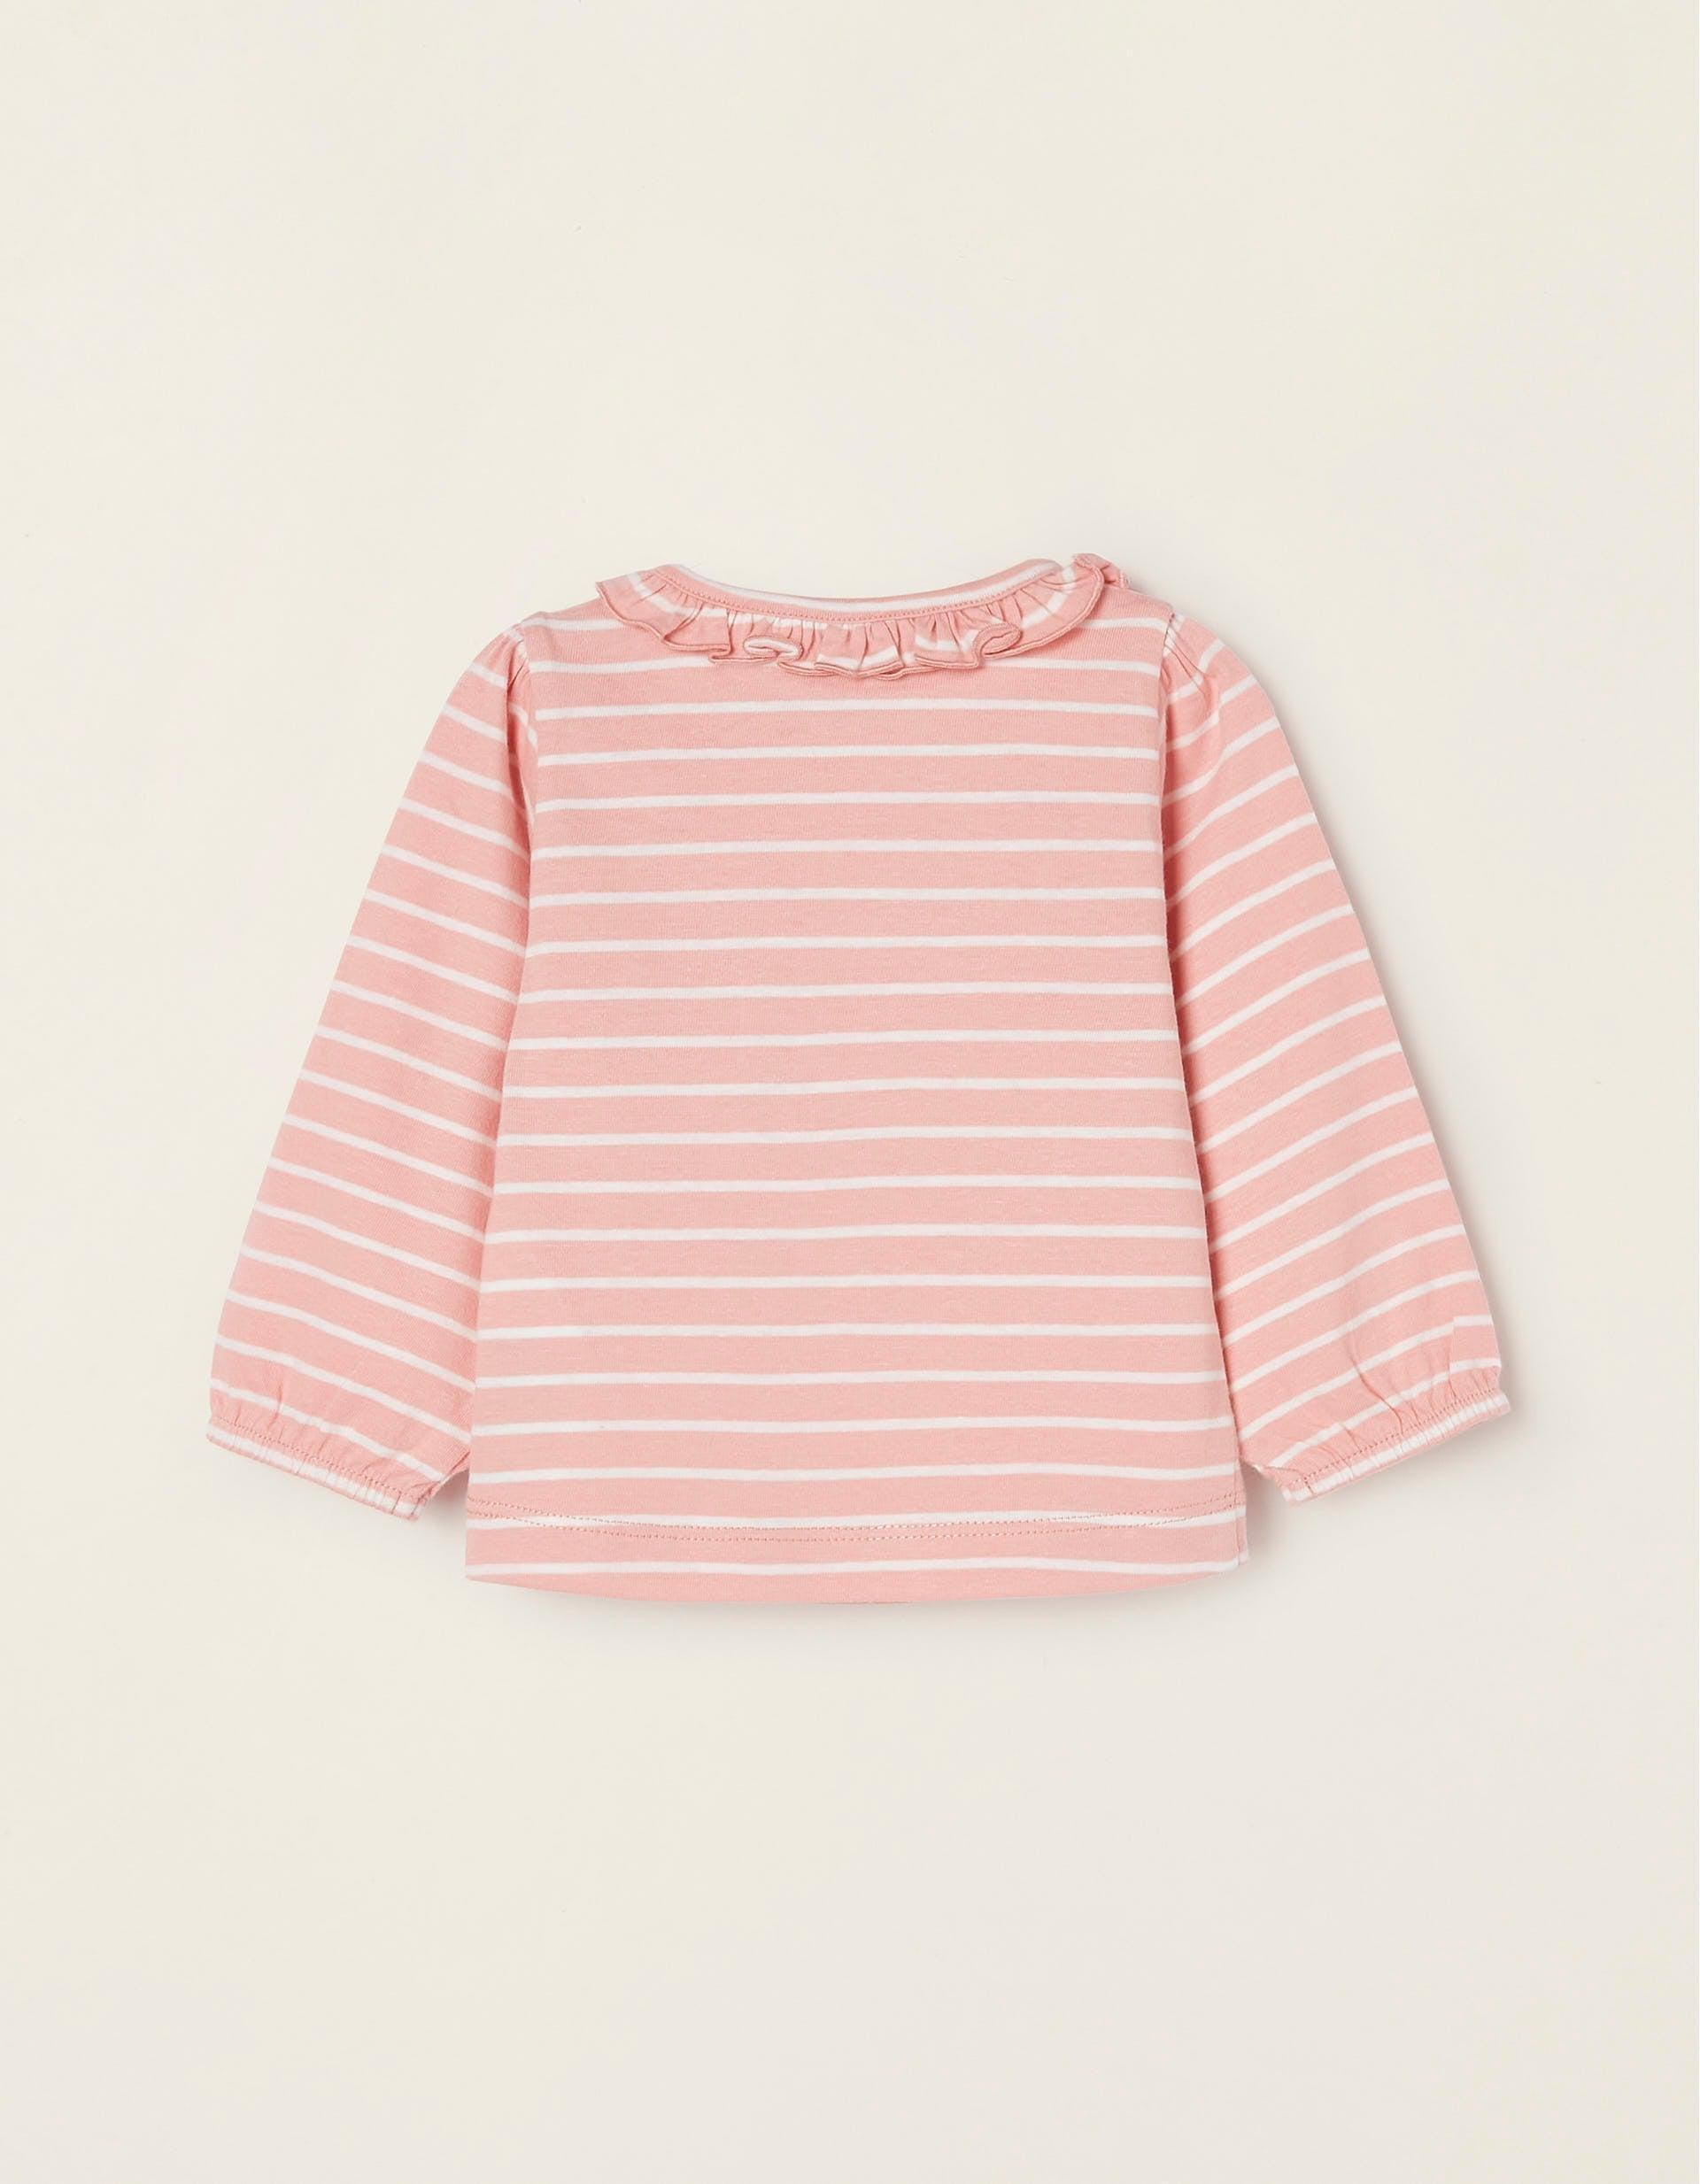 Zippy - Pink Long-Sleeve Cotton T-Shirt, Baby Girls